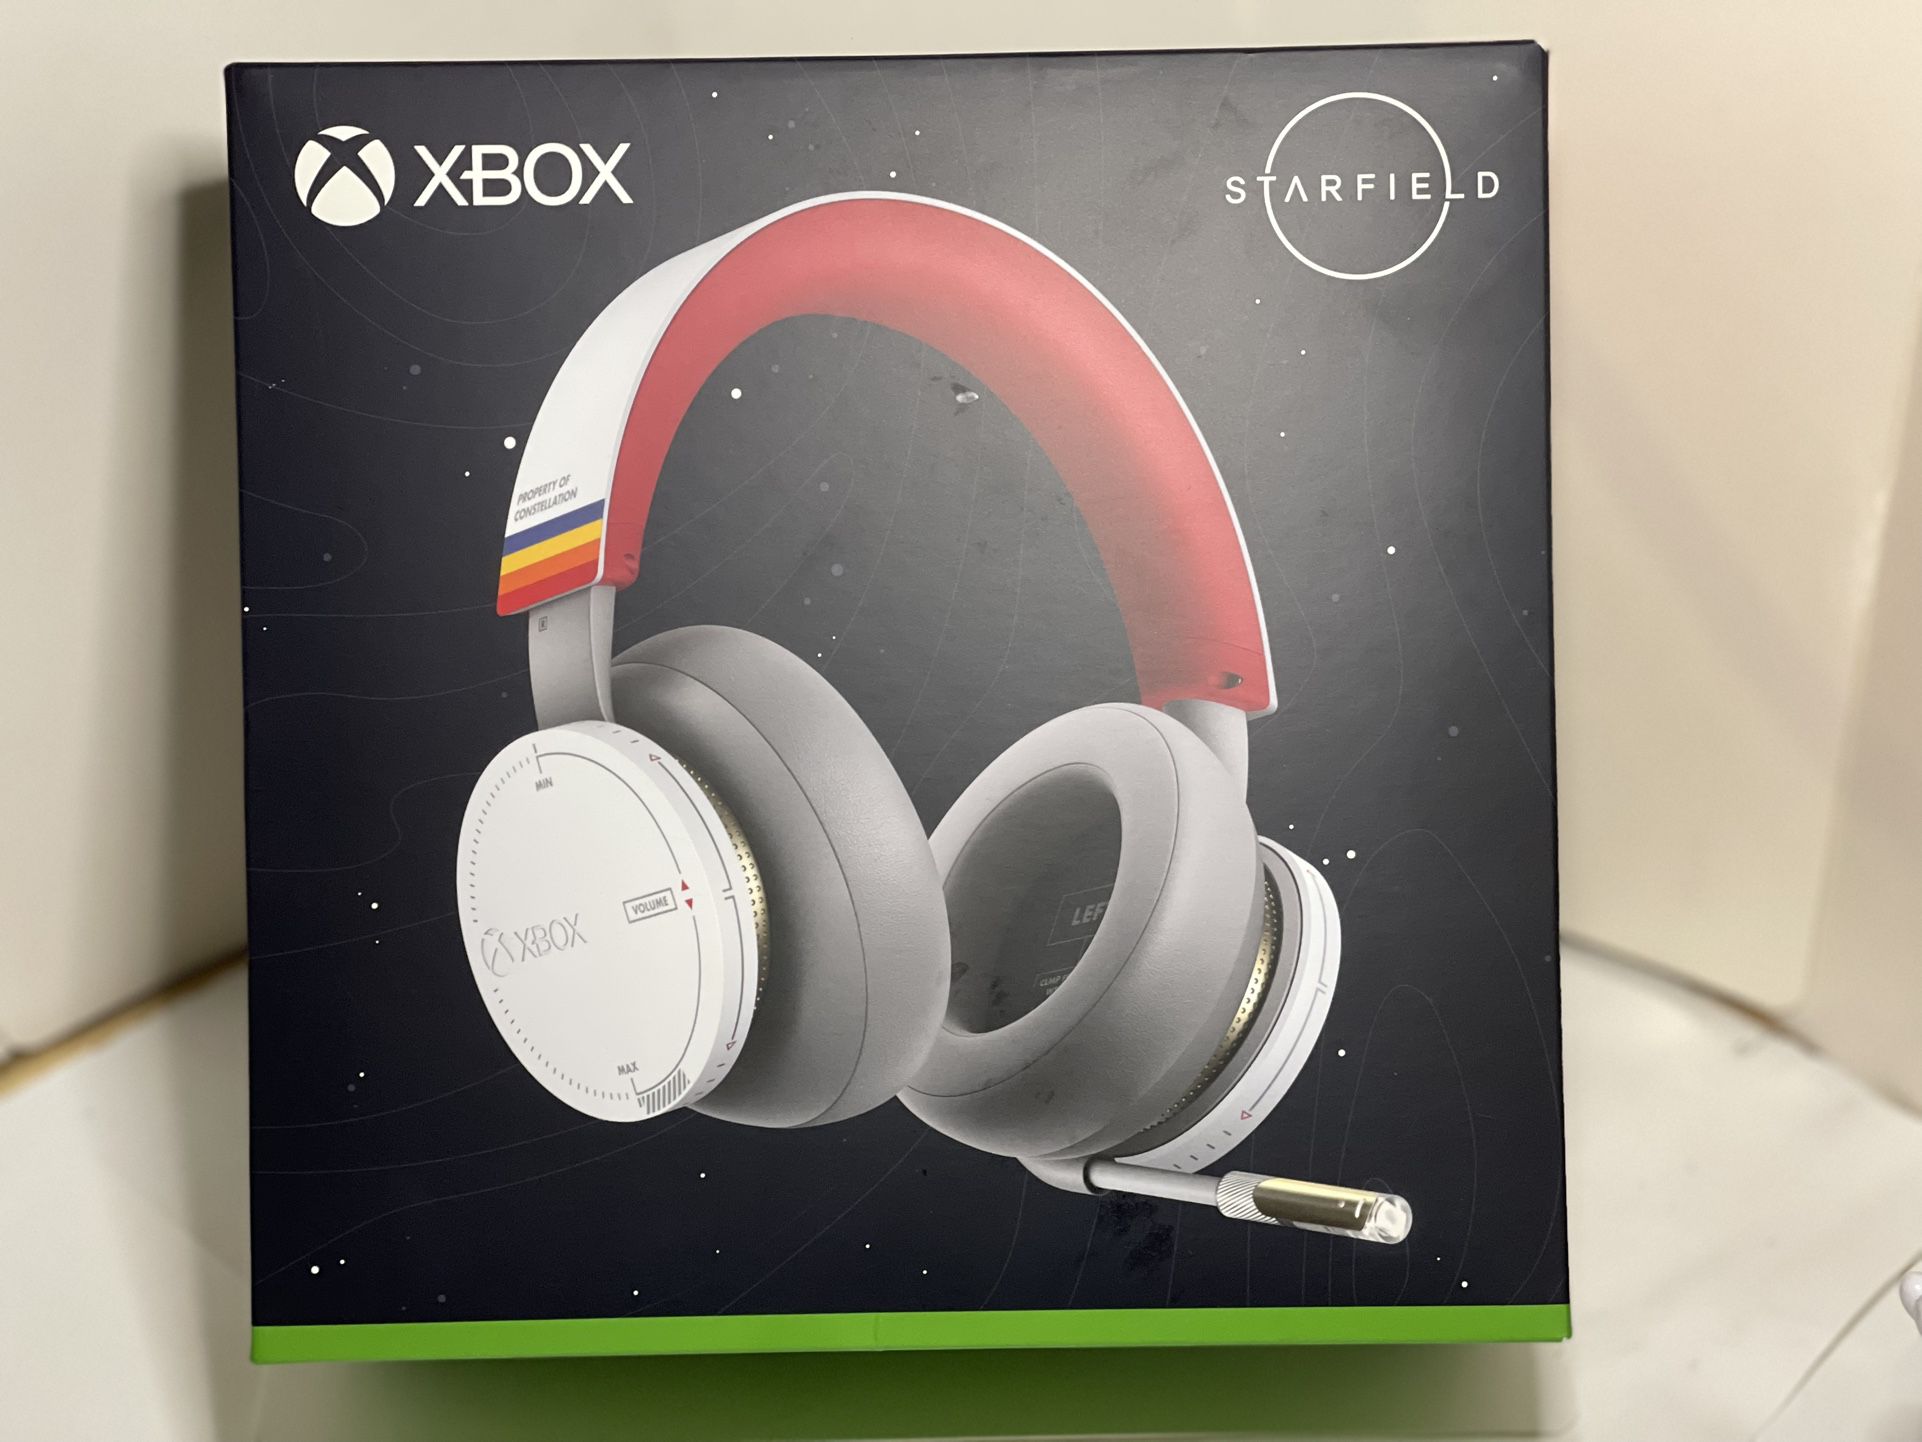 Starfled Xbox Headphones Limited Edition